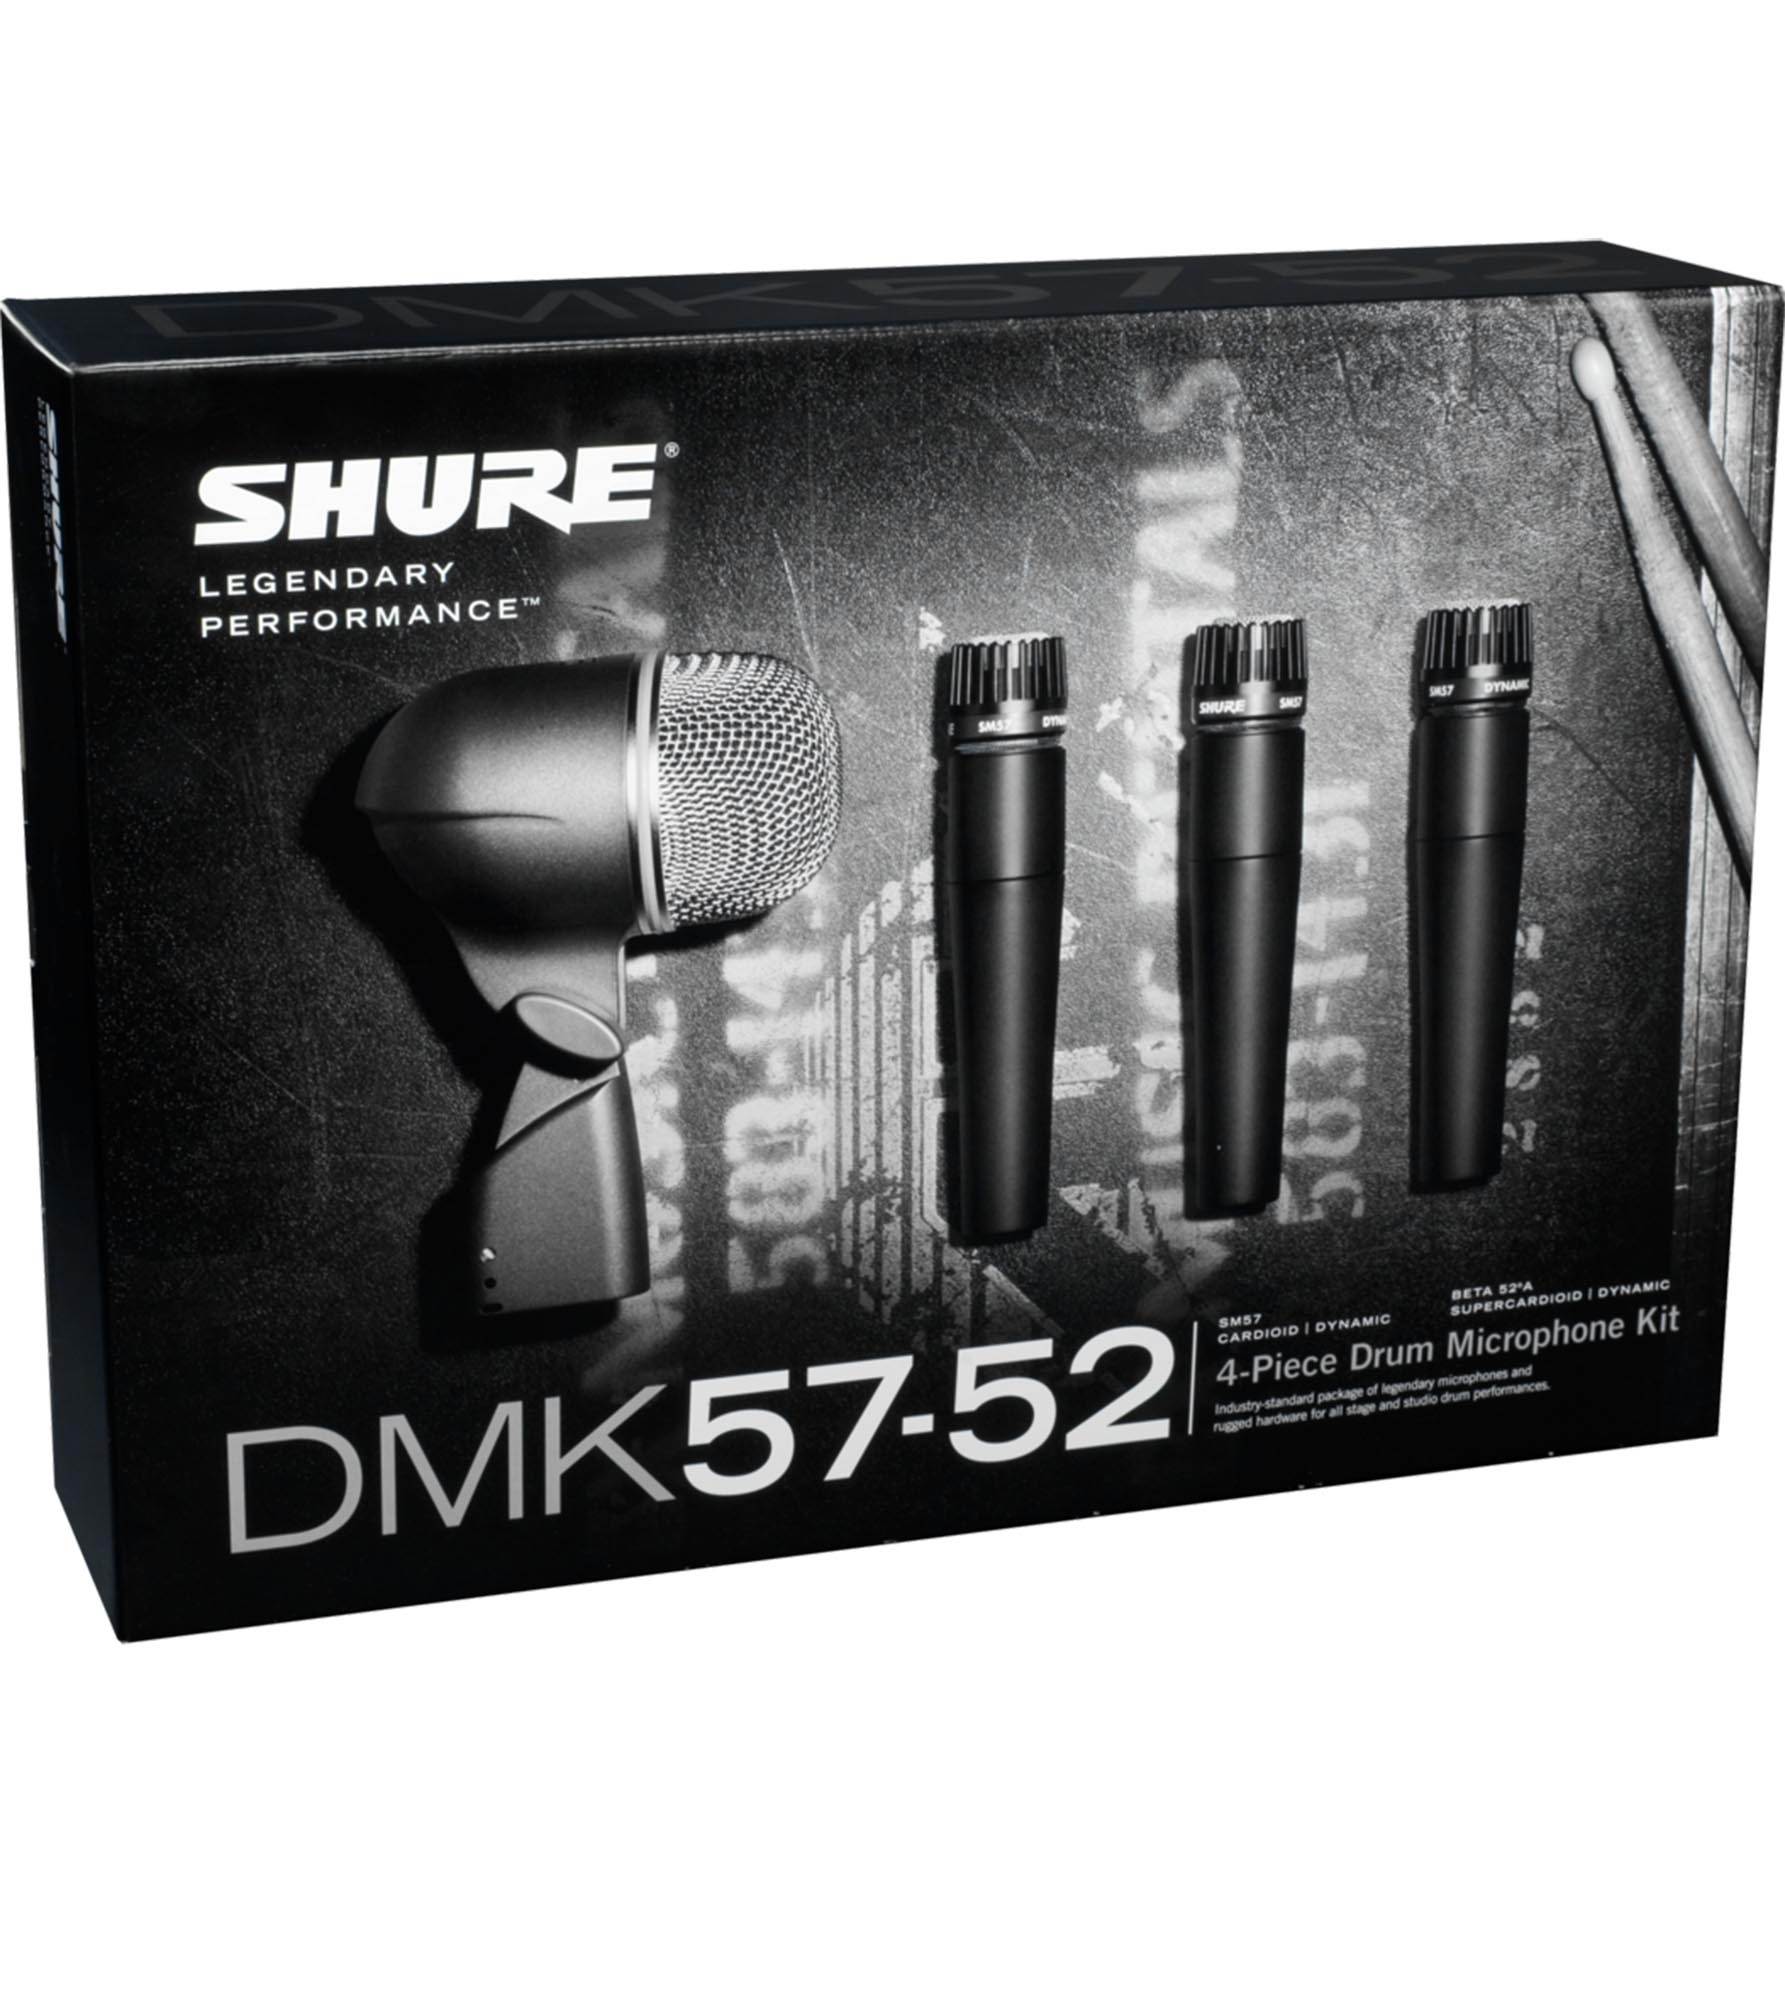 B-Stock: Shure DMK57-52 Drum Microphone Kit - Hollywood DJ